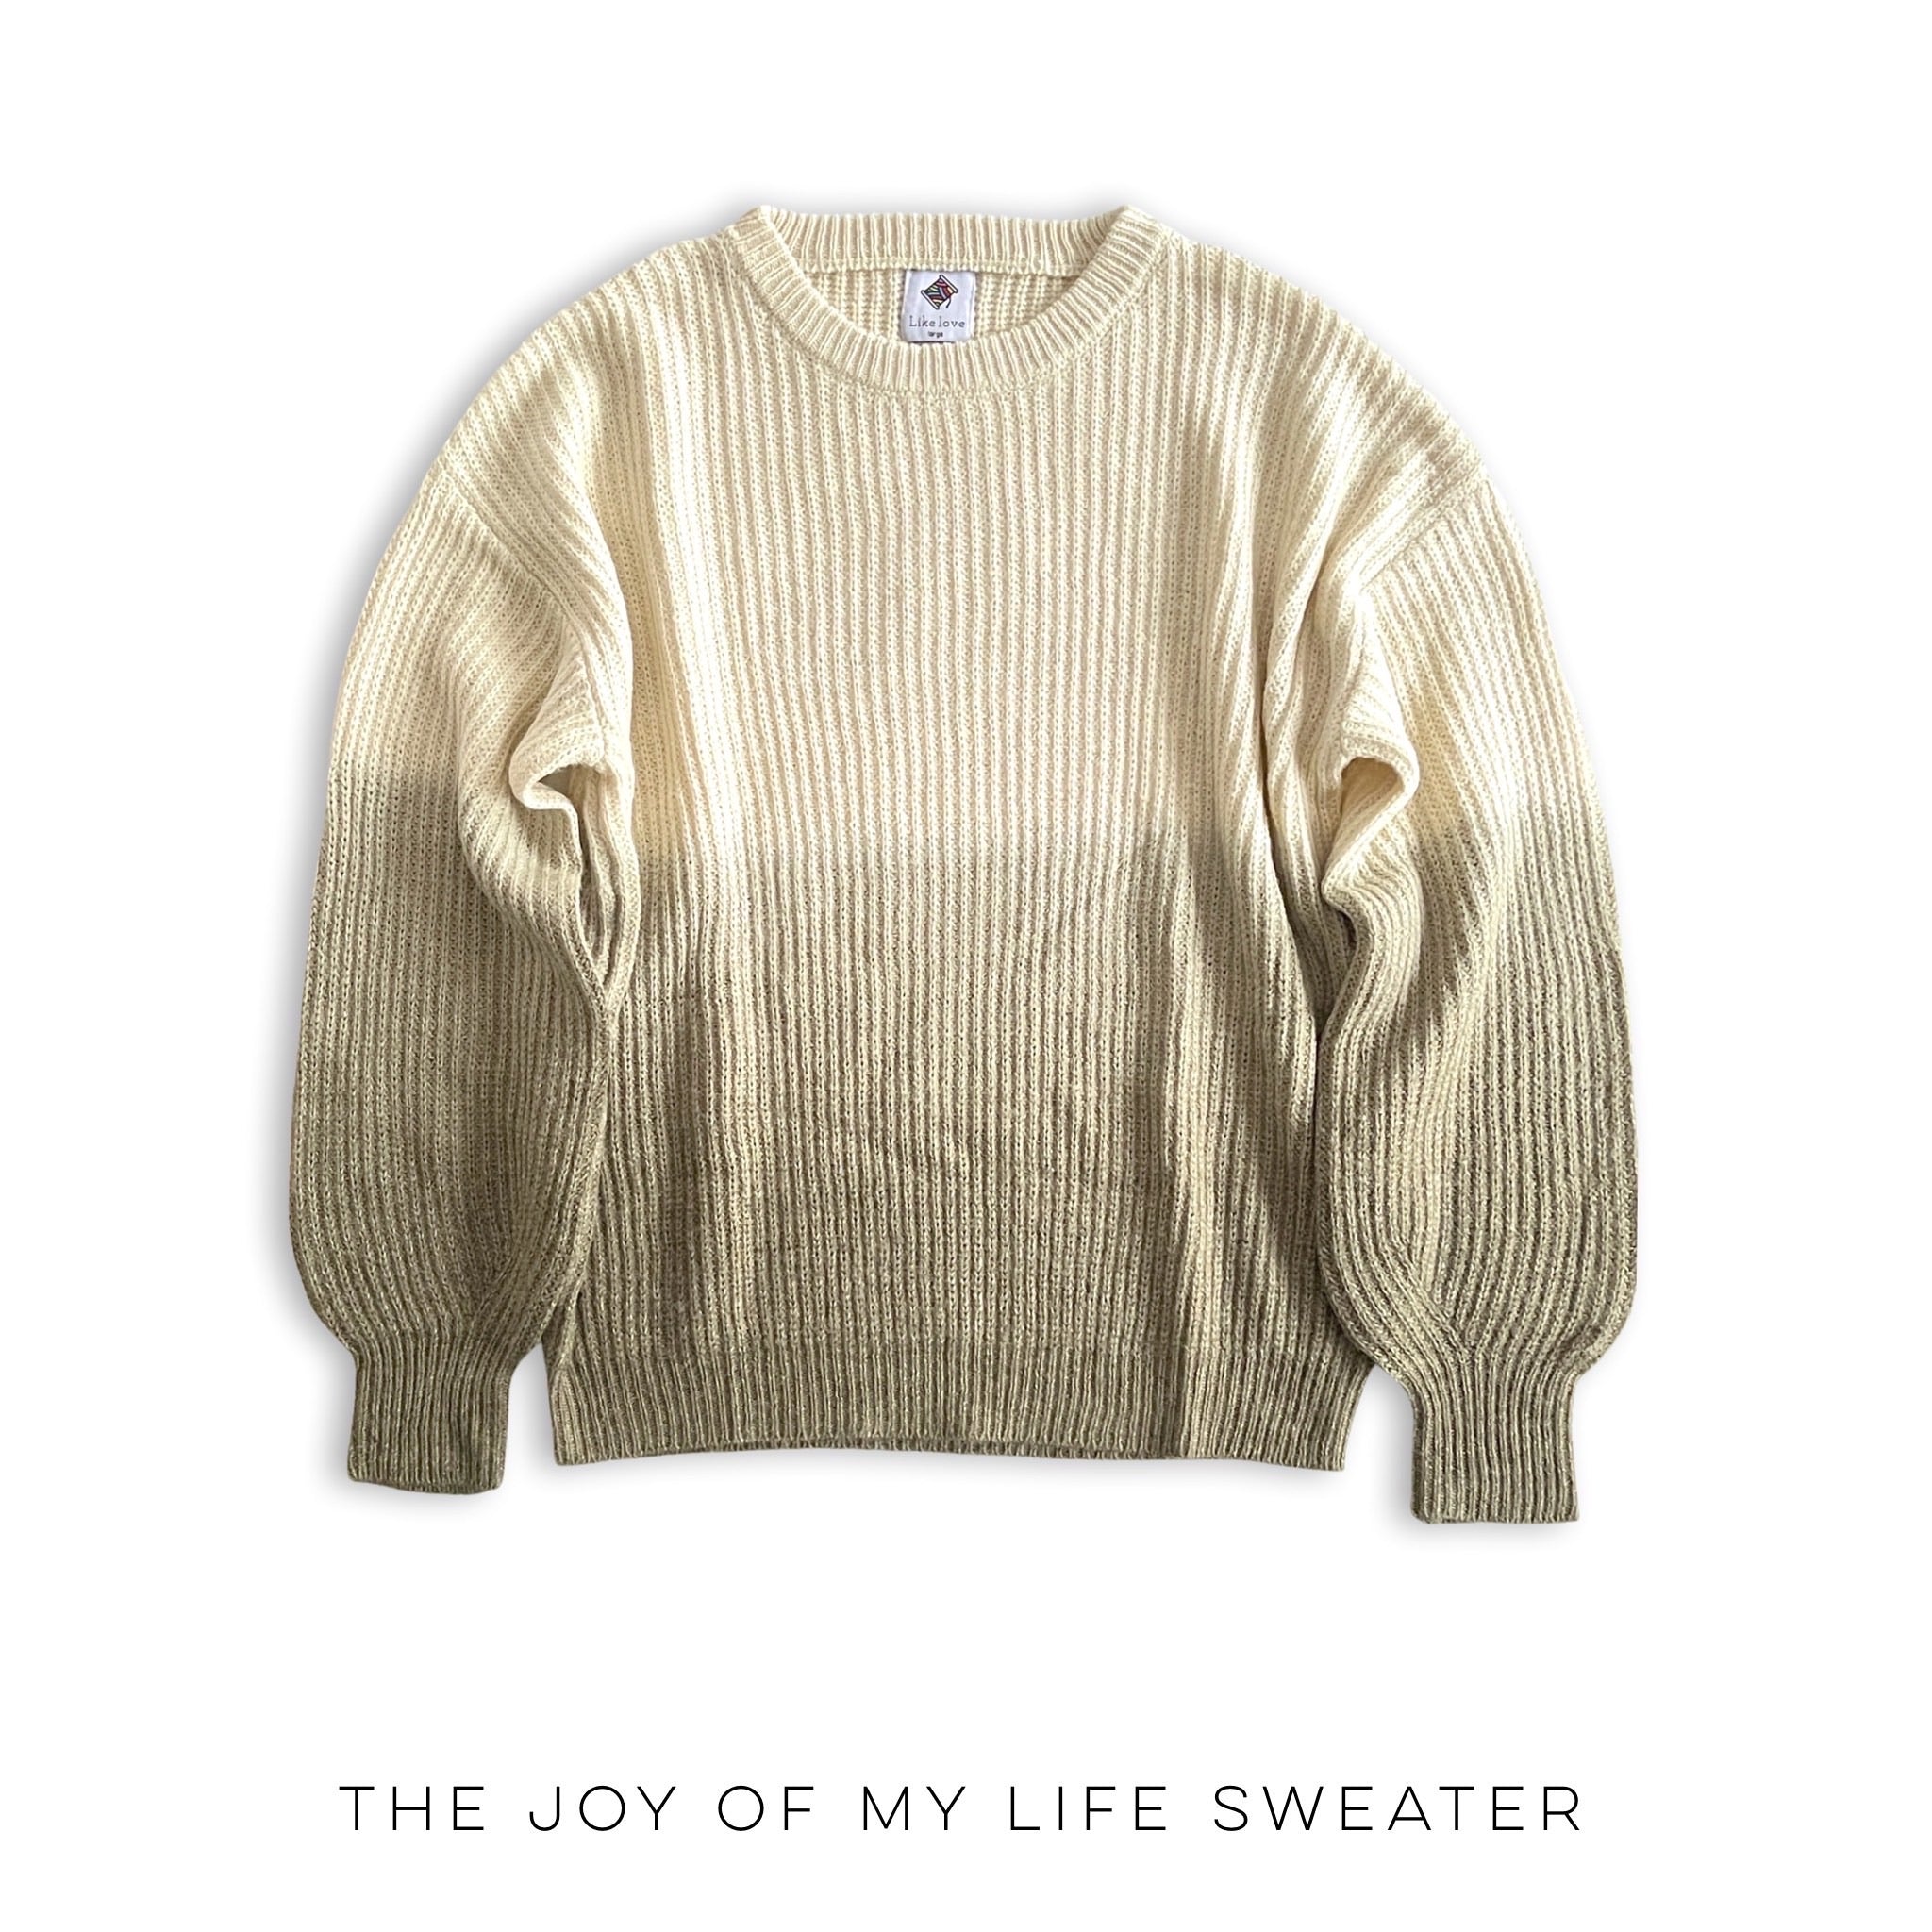 The Joy of My Life Sweater